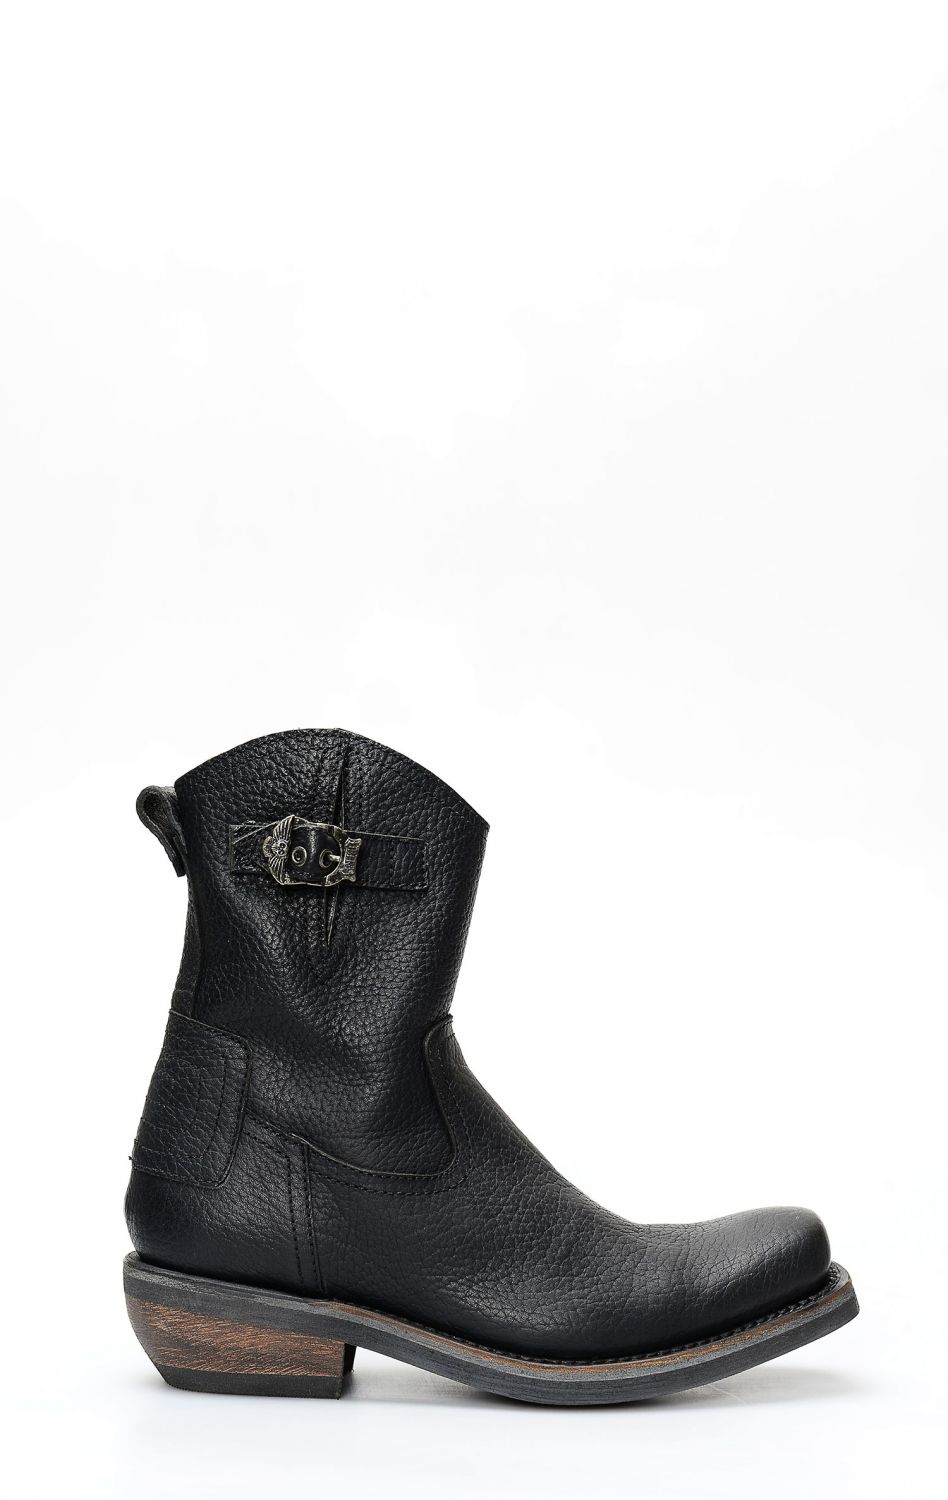 Liberty Black biker boot with zipper and square toe | LBK85004GZN